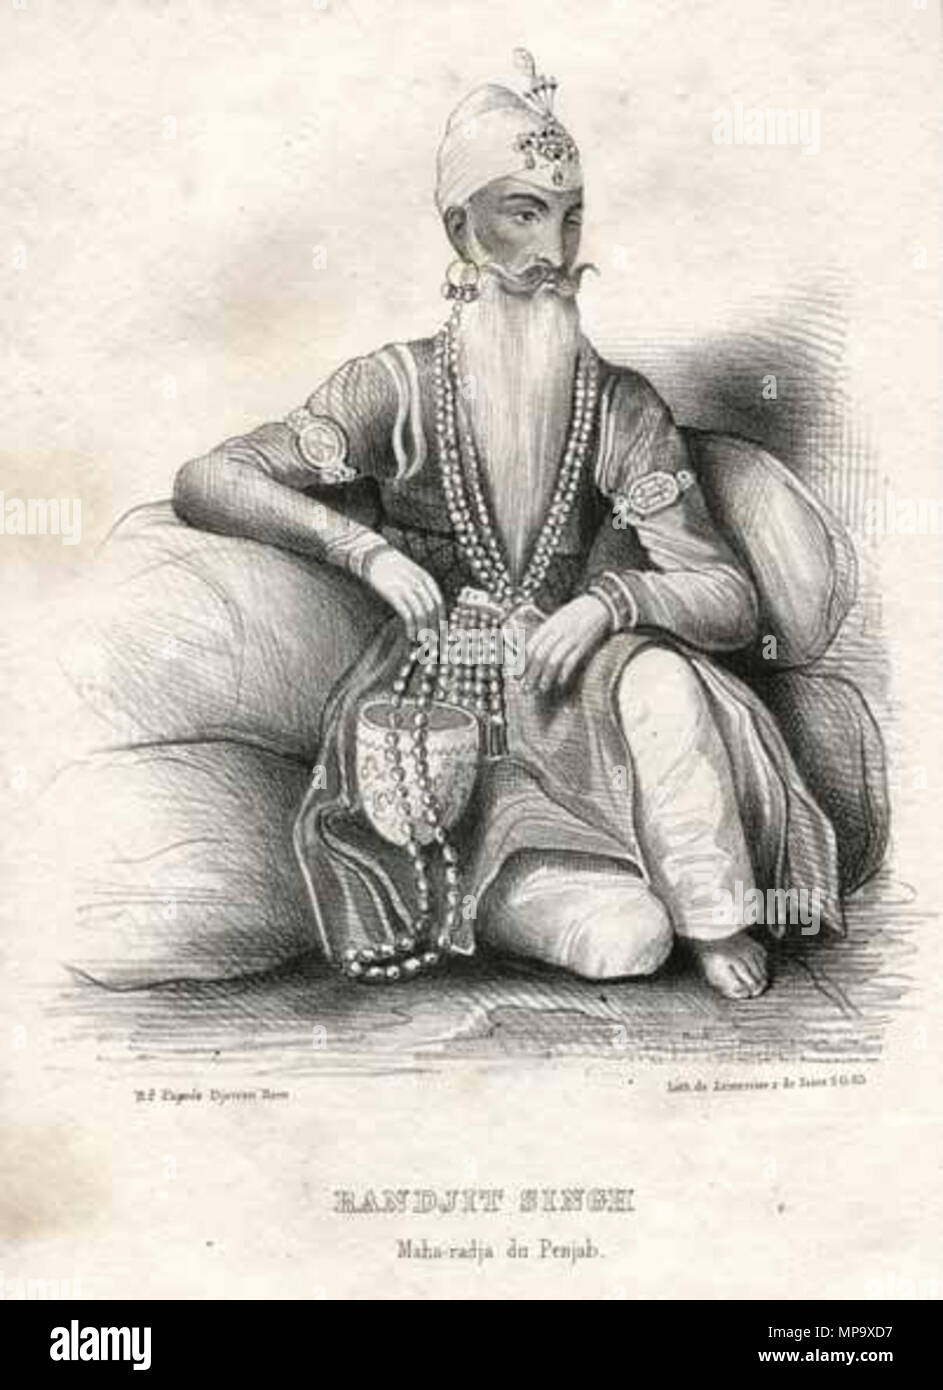 Maharaja Ranjit singh ji with his jarnails | Graphite drawings, Drawings,  Pencil art drawings